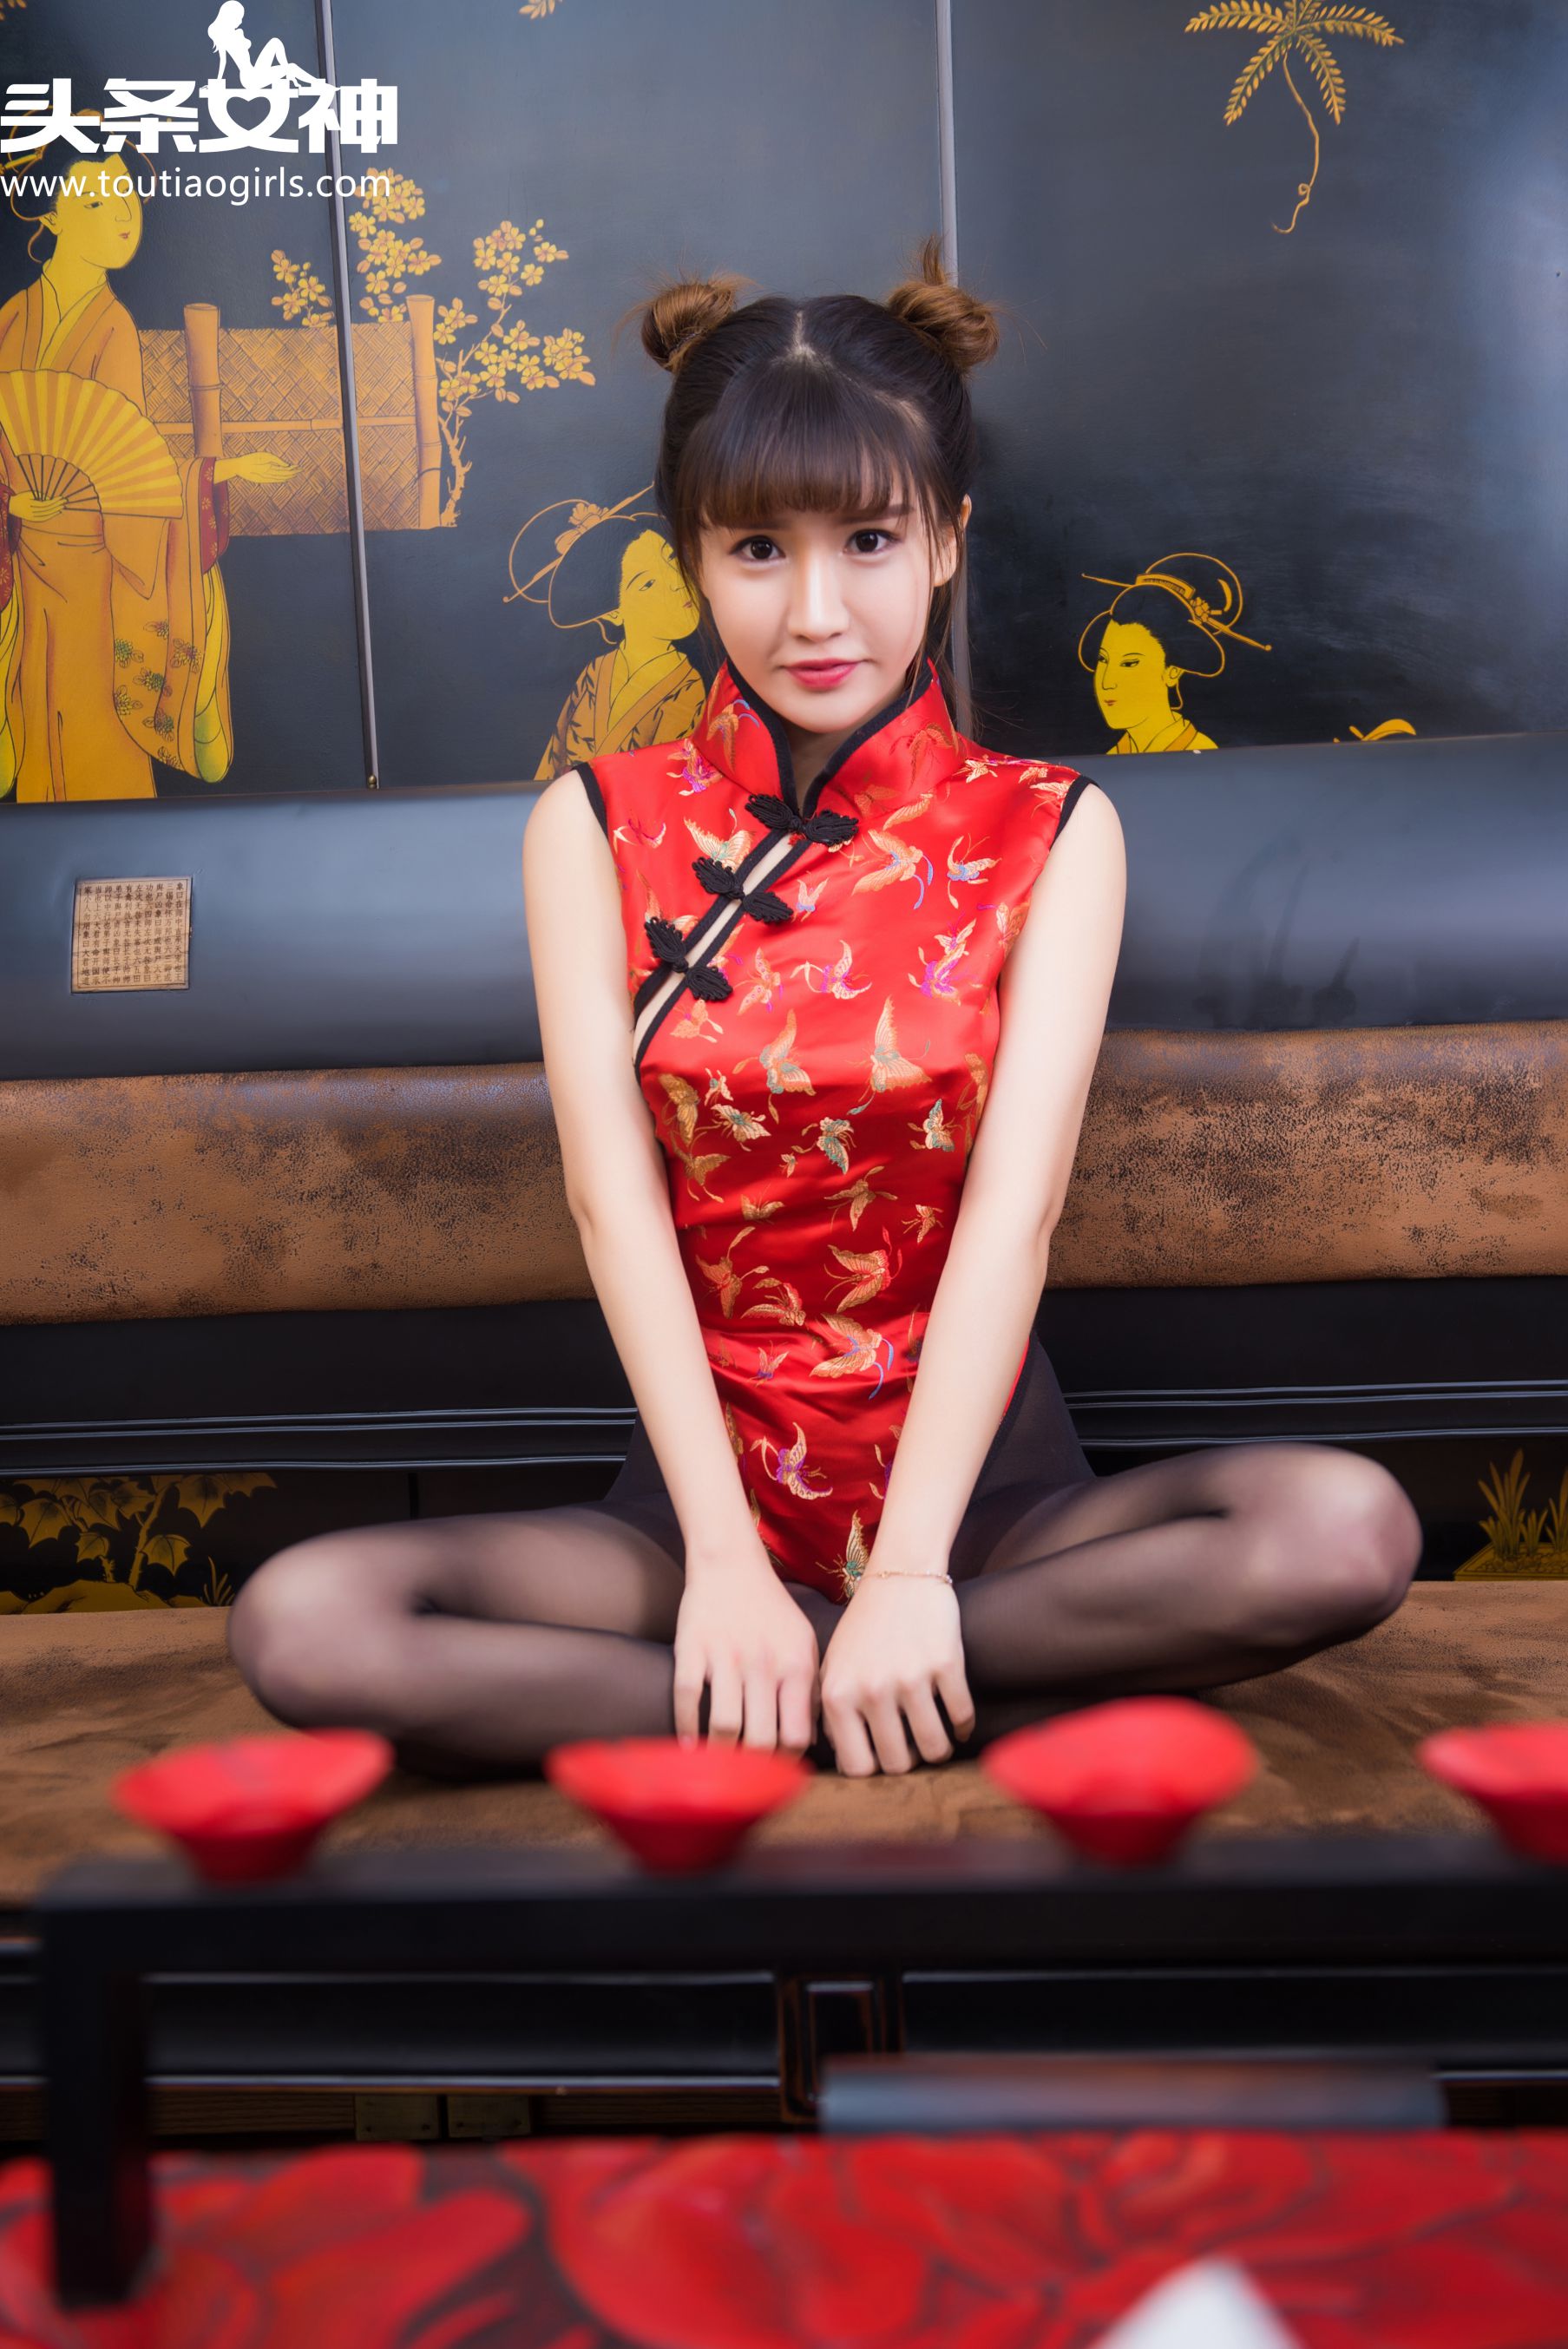 K8傲娇萌萌Vivian(2)[50P]|MM 写真 - 武当休闲山庄 - 稳定,和谐,人性化的中文社区